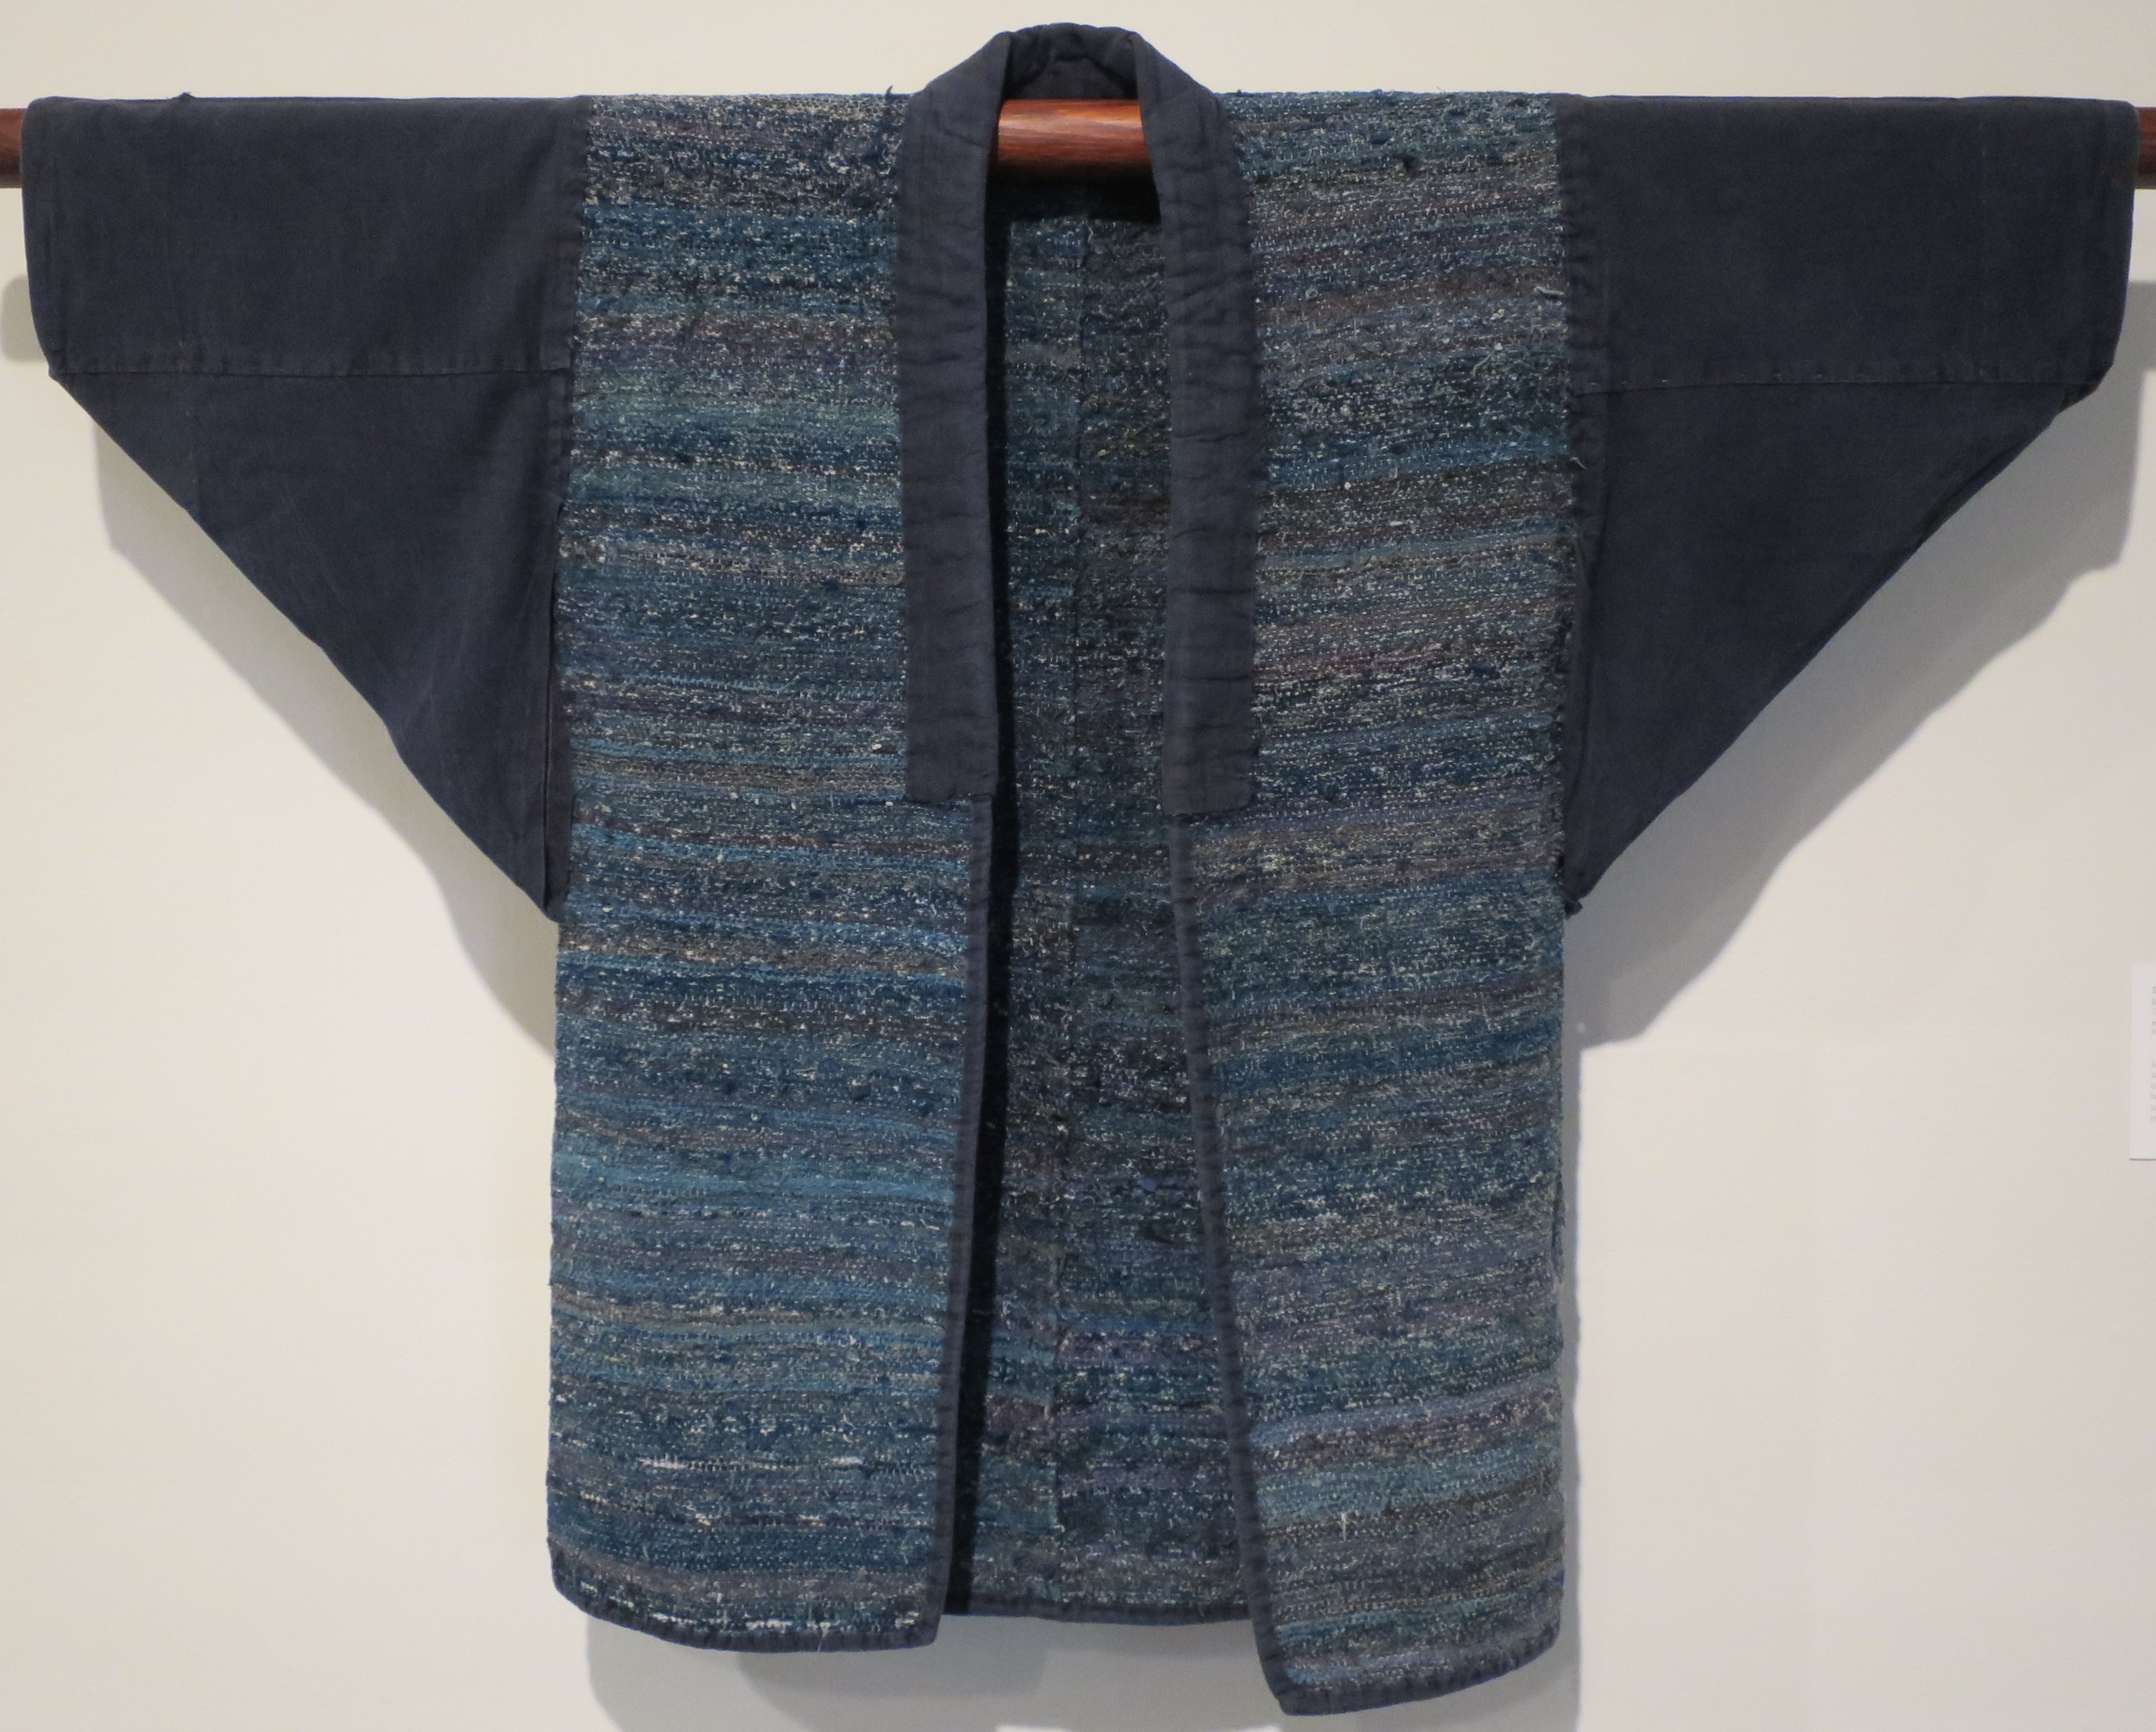 Sakiori (rag woven) work jacket from Japan, Honolulu Museum of Art, 9074.1